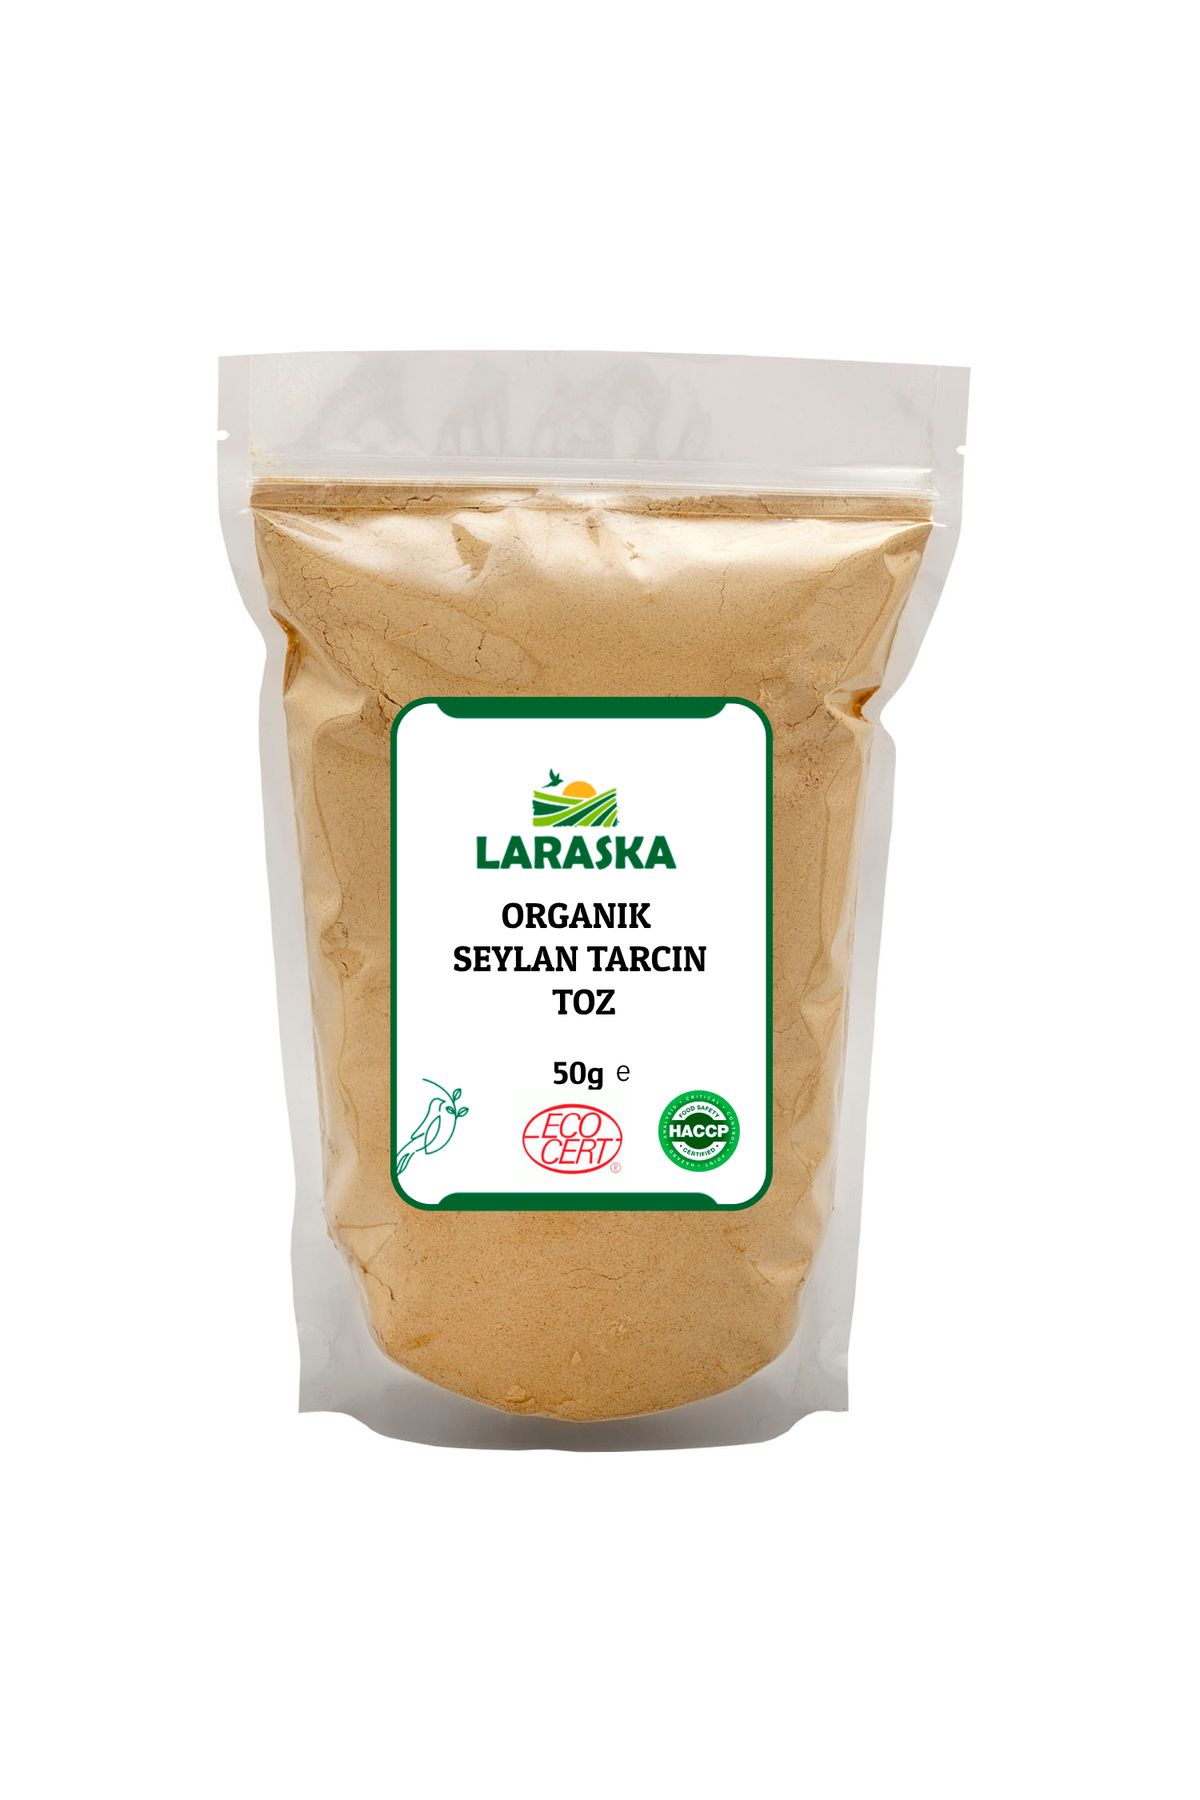 Laraska Organik Organik Seylan - Seylon Tarçın Toz 50g - Organic Ceylon Cinnamon Powder 50g- Organically Certified